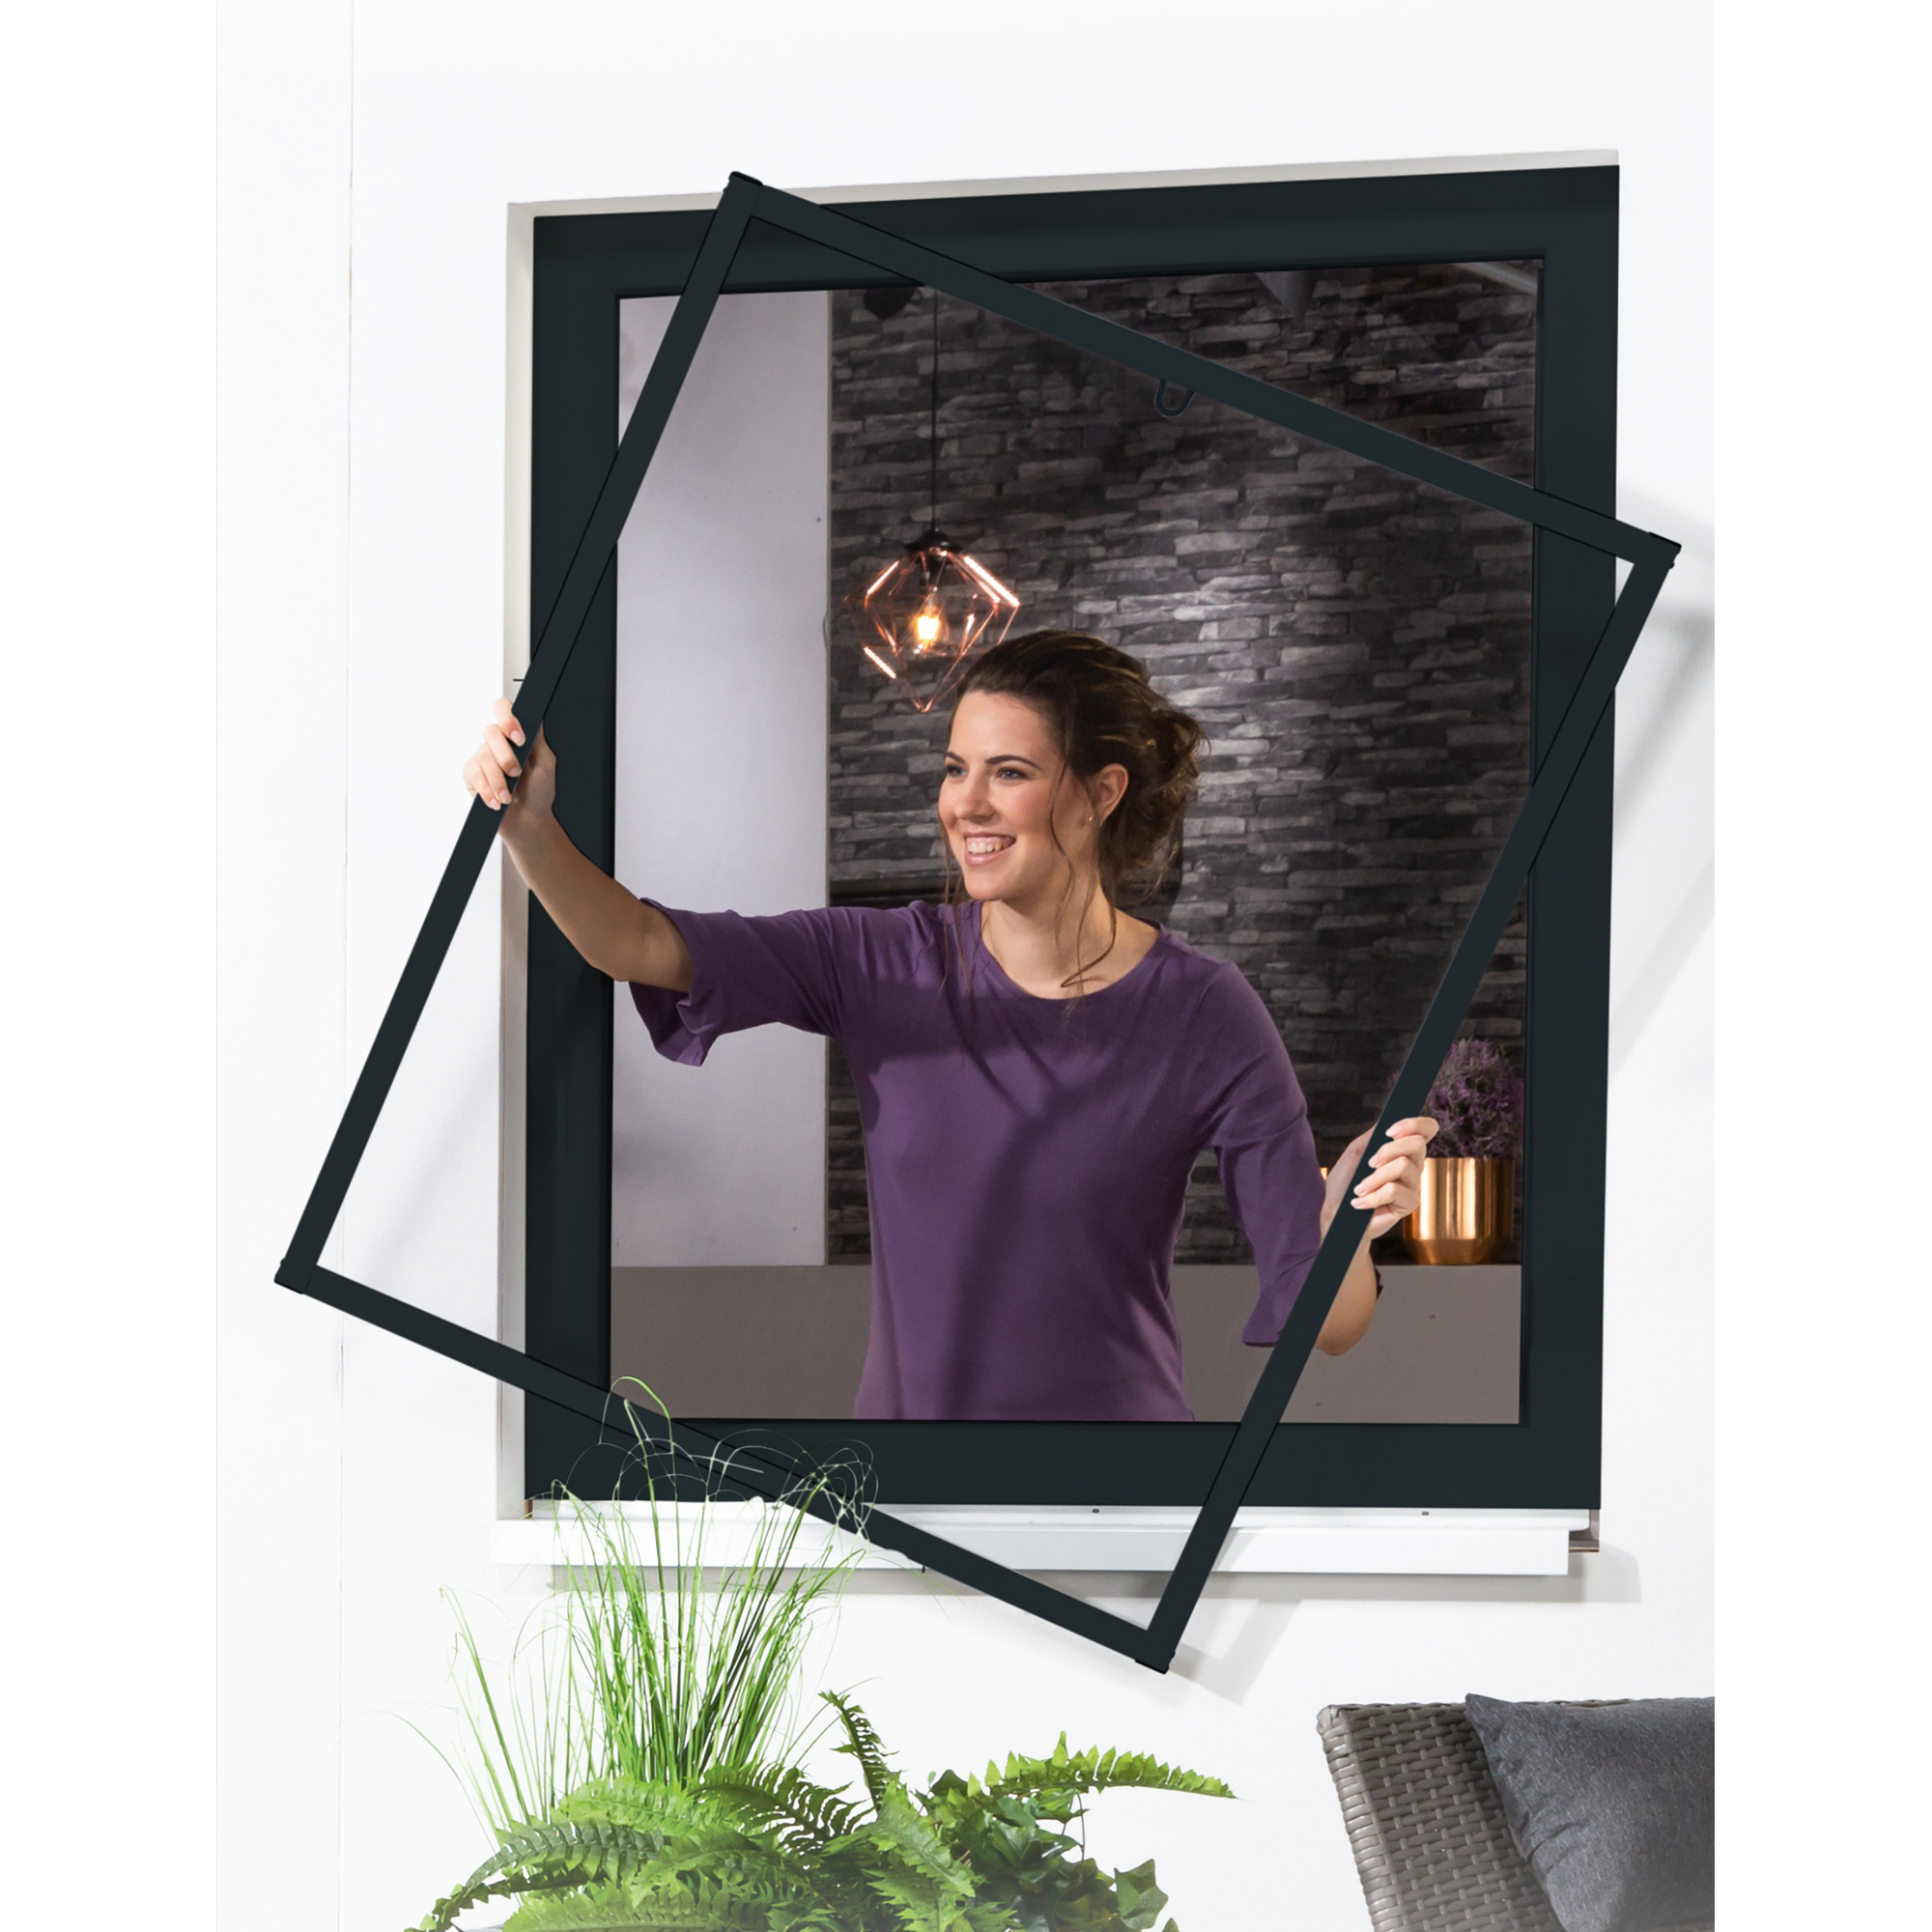 Alu-Bausatz für Fenster 'Master Slim' 130 x 150 cm anthrazit + product picture